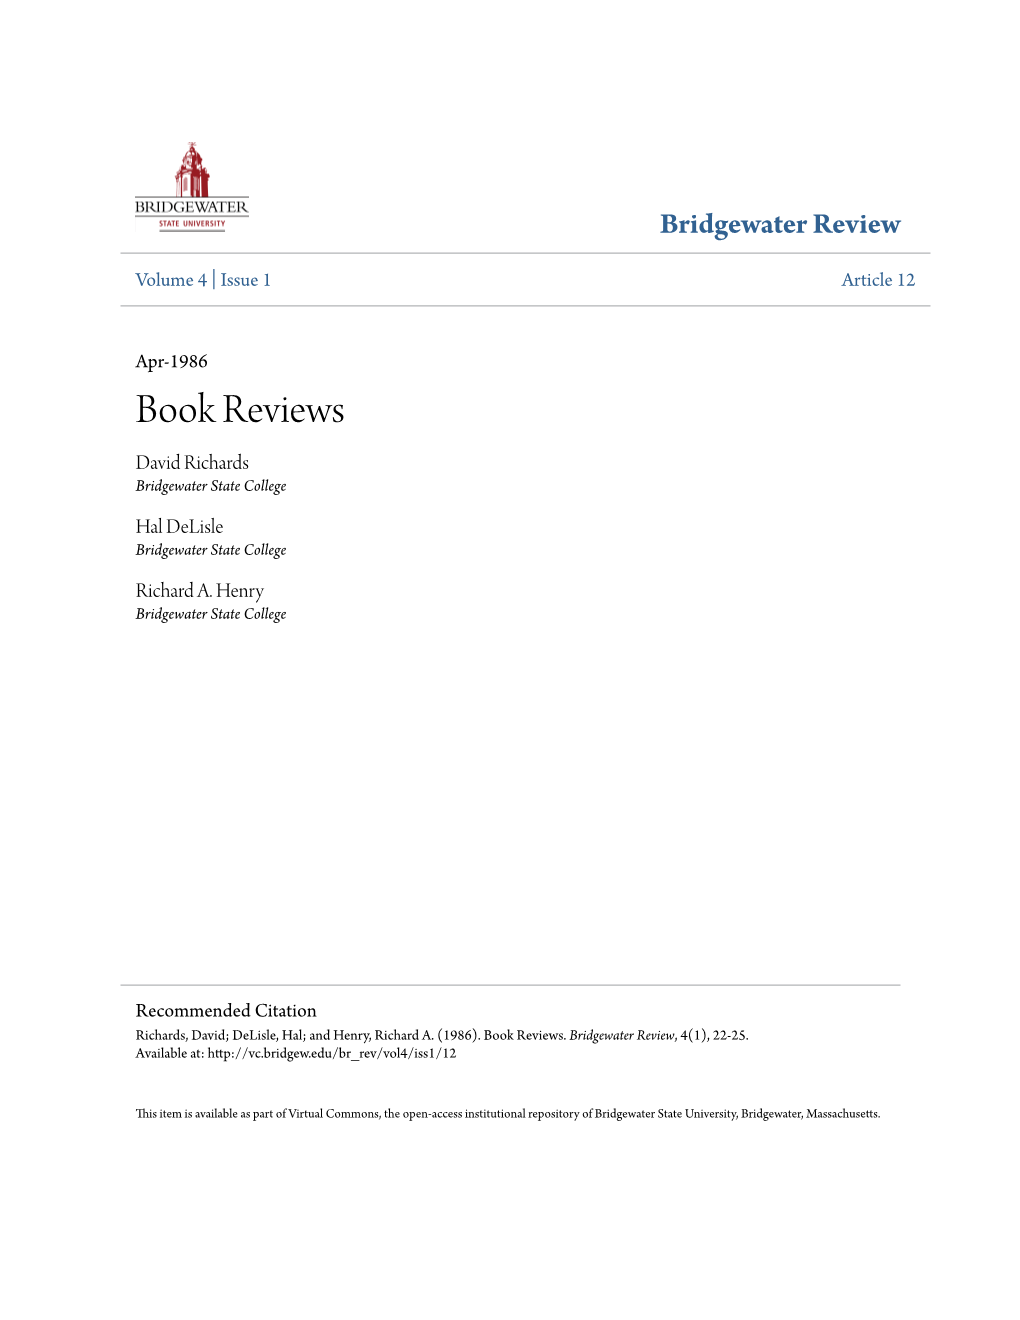 Book Reviews David Richards Bridgewater State College